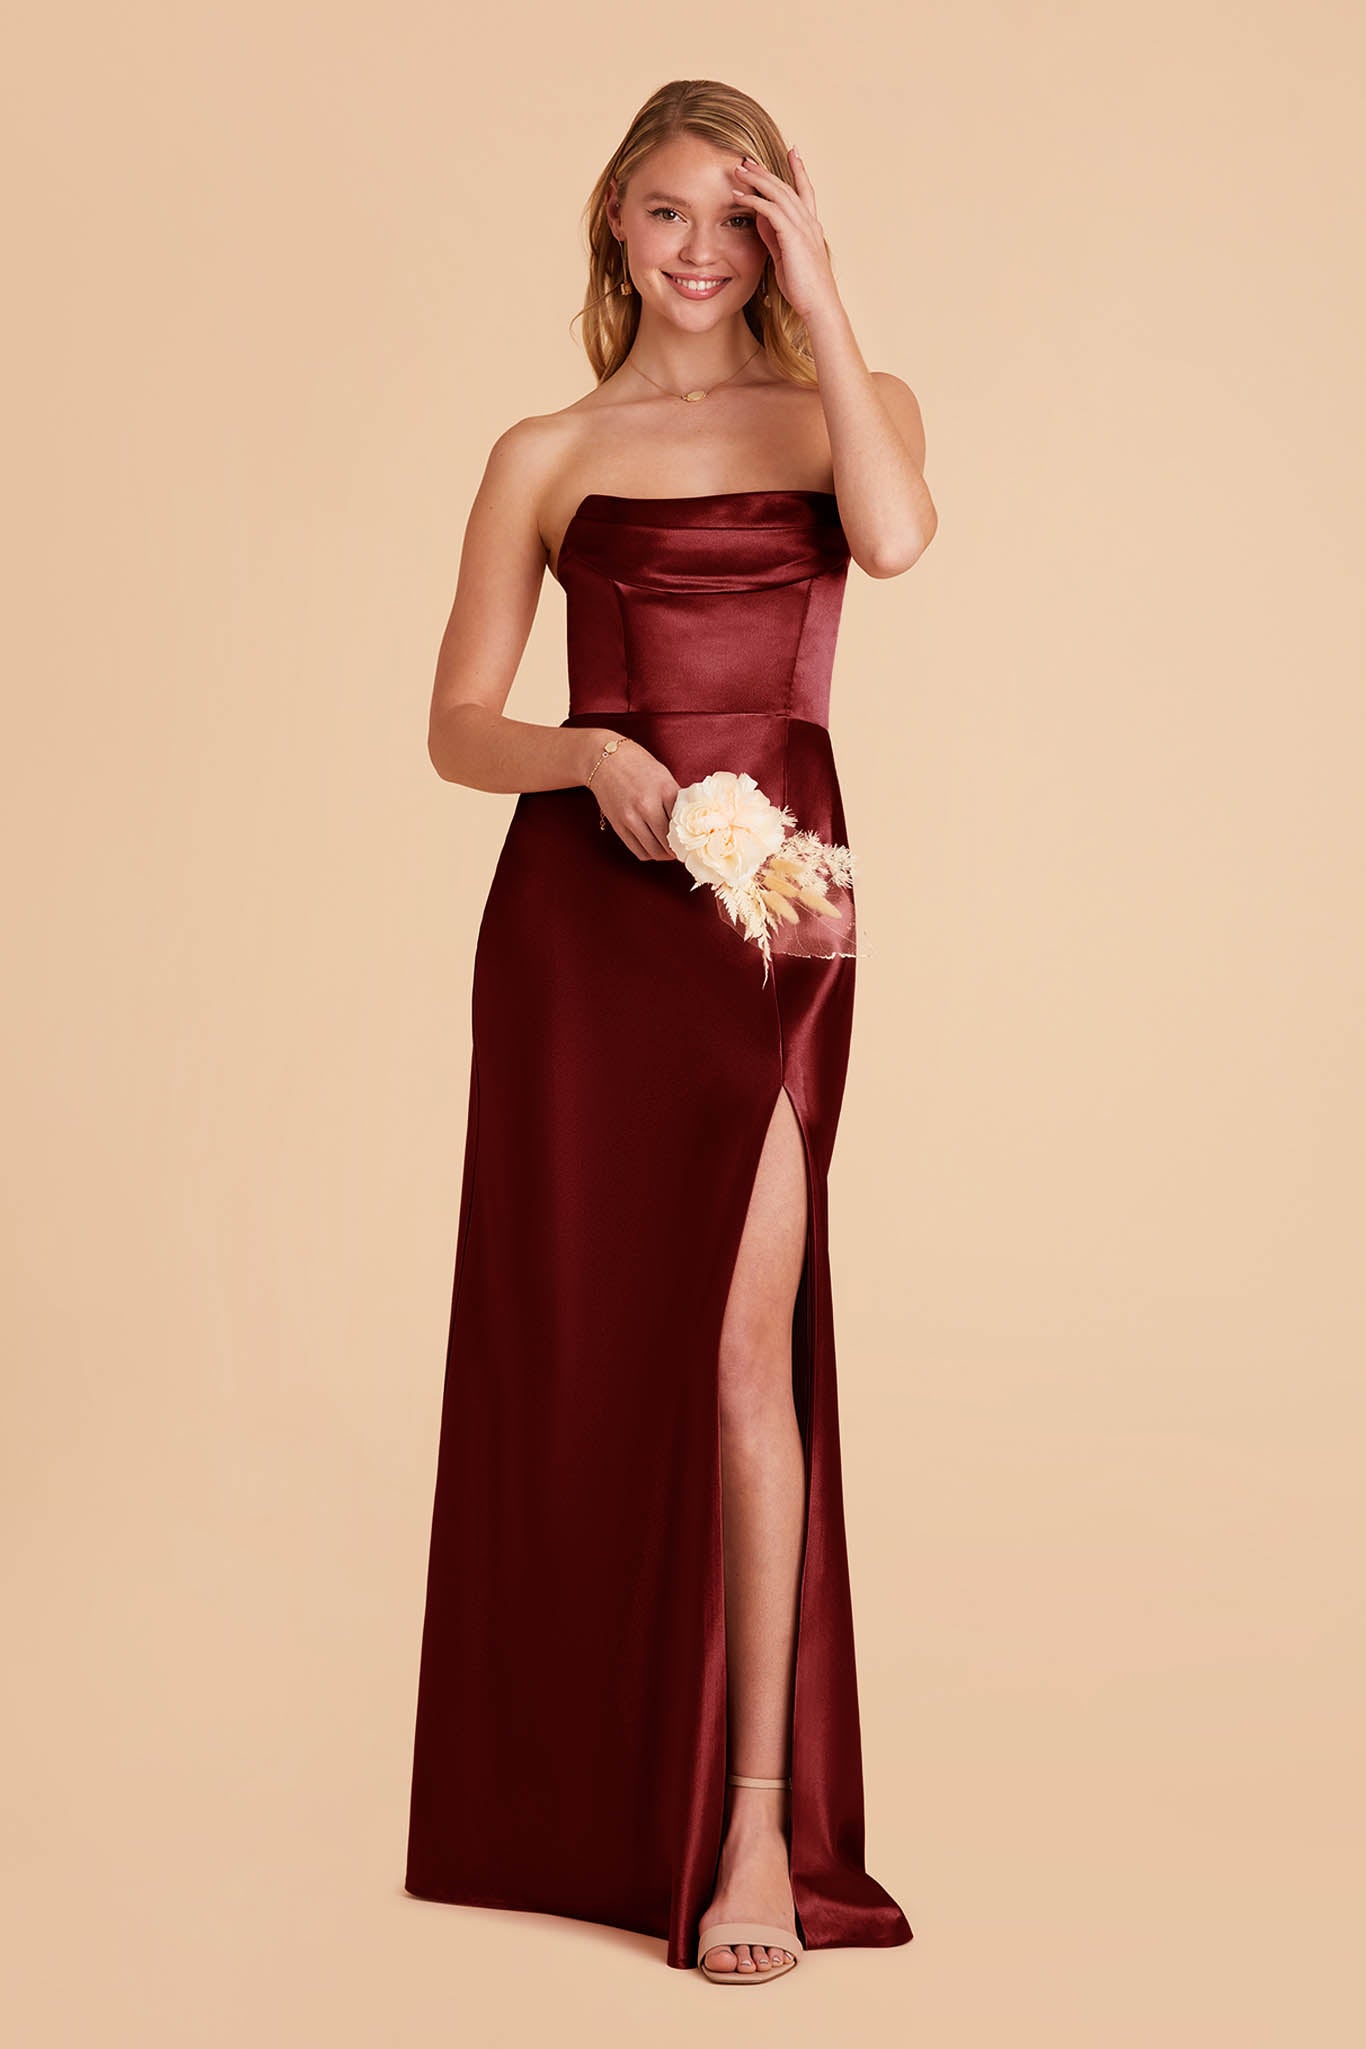 Buy Burgundy Infinity Dress, Wine Multiway Dress 